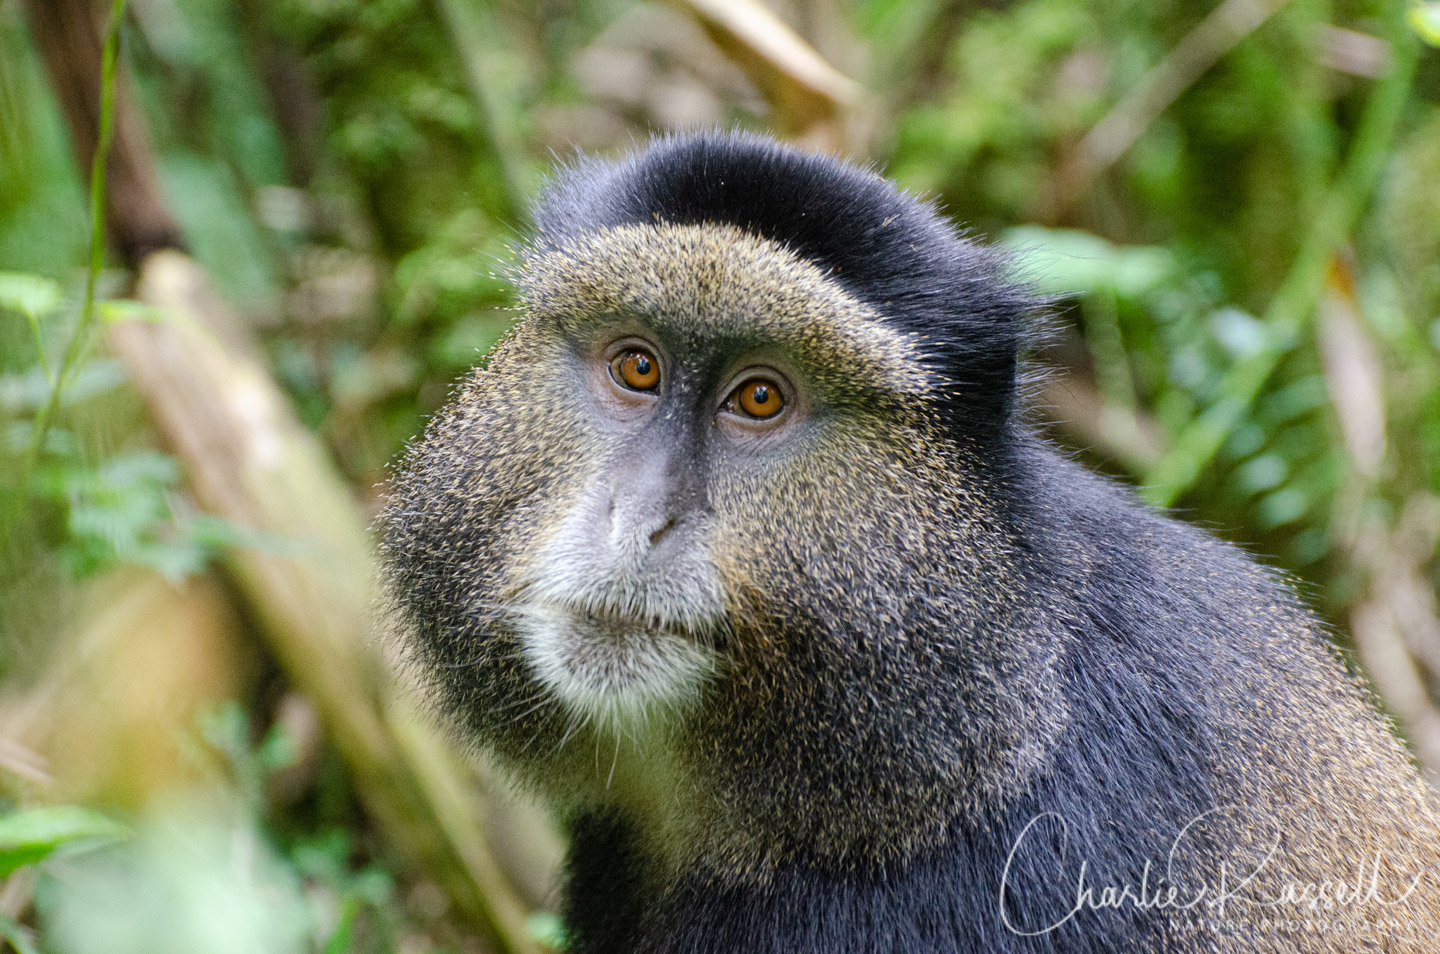 Golden Monkey, Cercopithecus mitis ssp. kandti